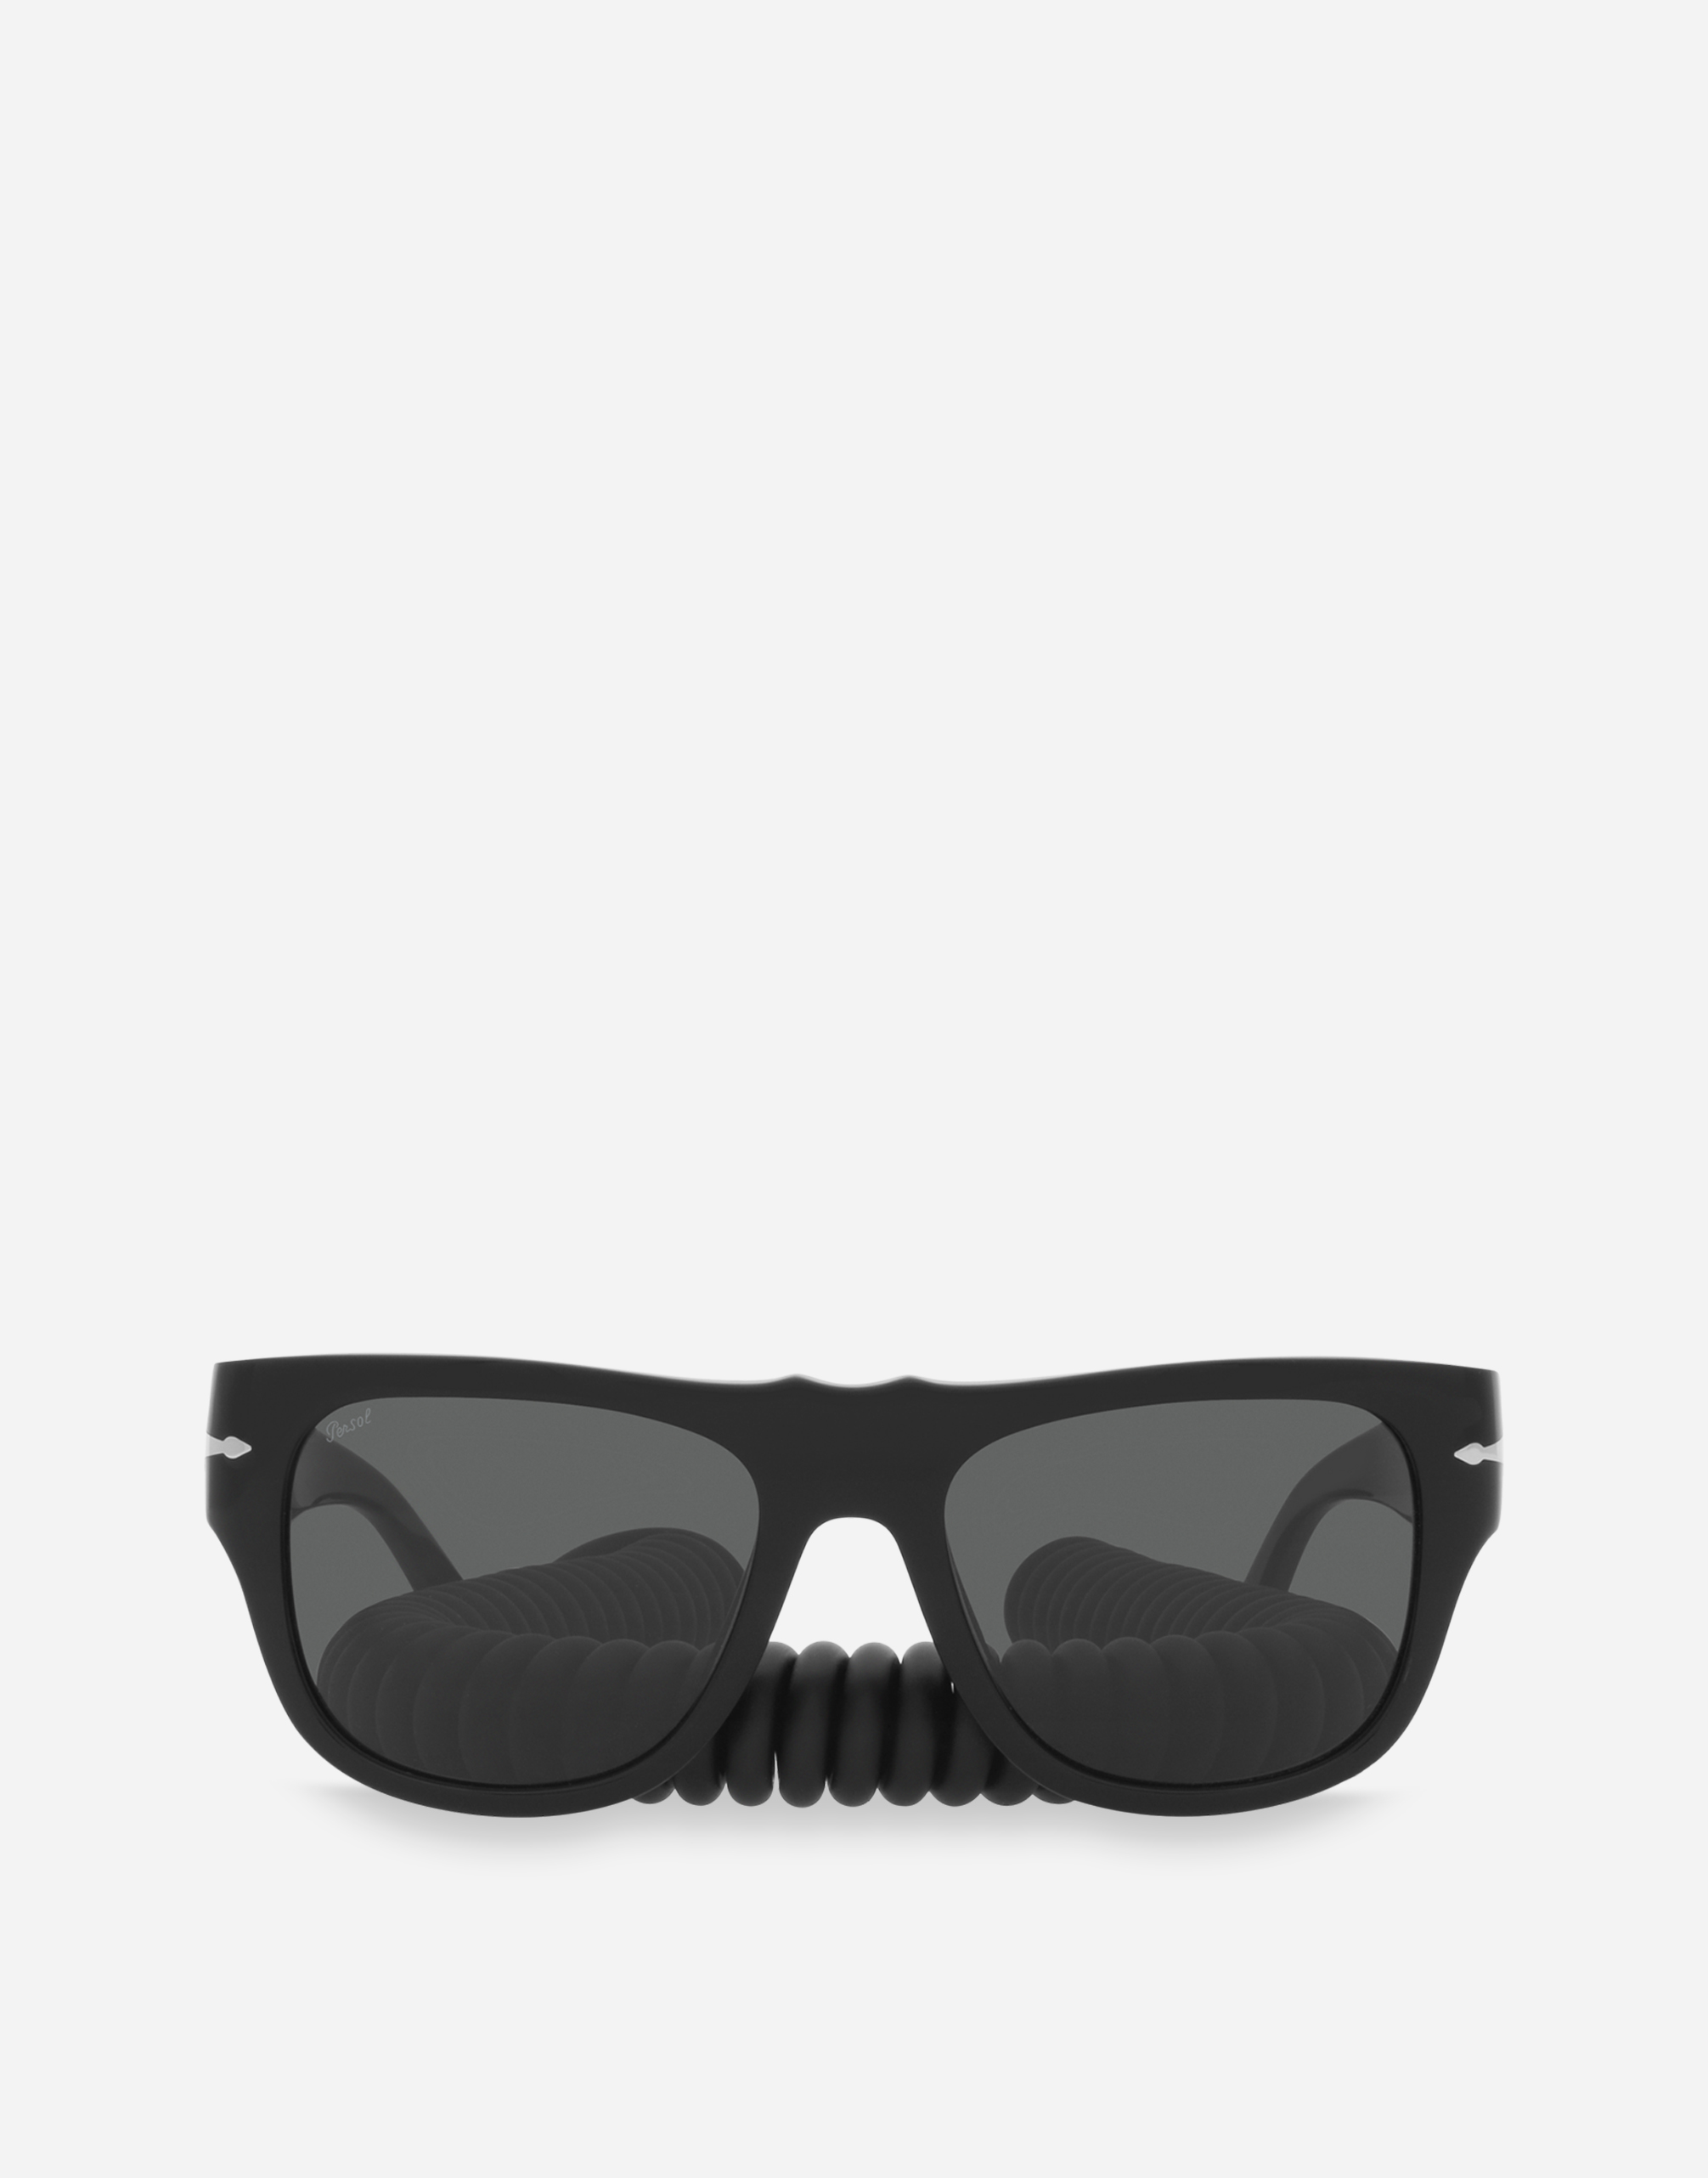 Dolce&Gabbana x Persol sunglasses in black